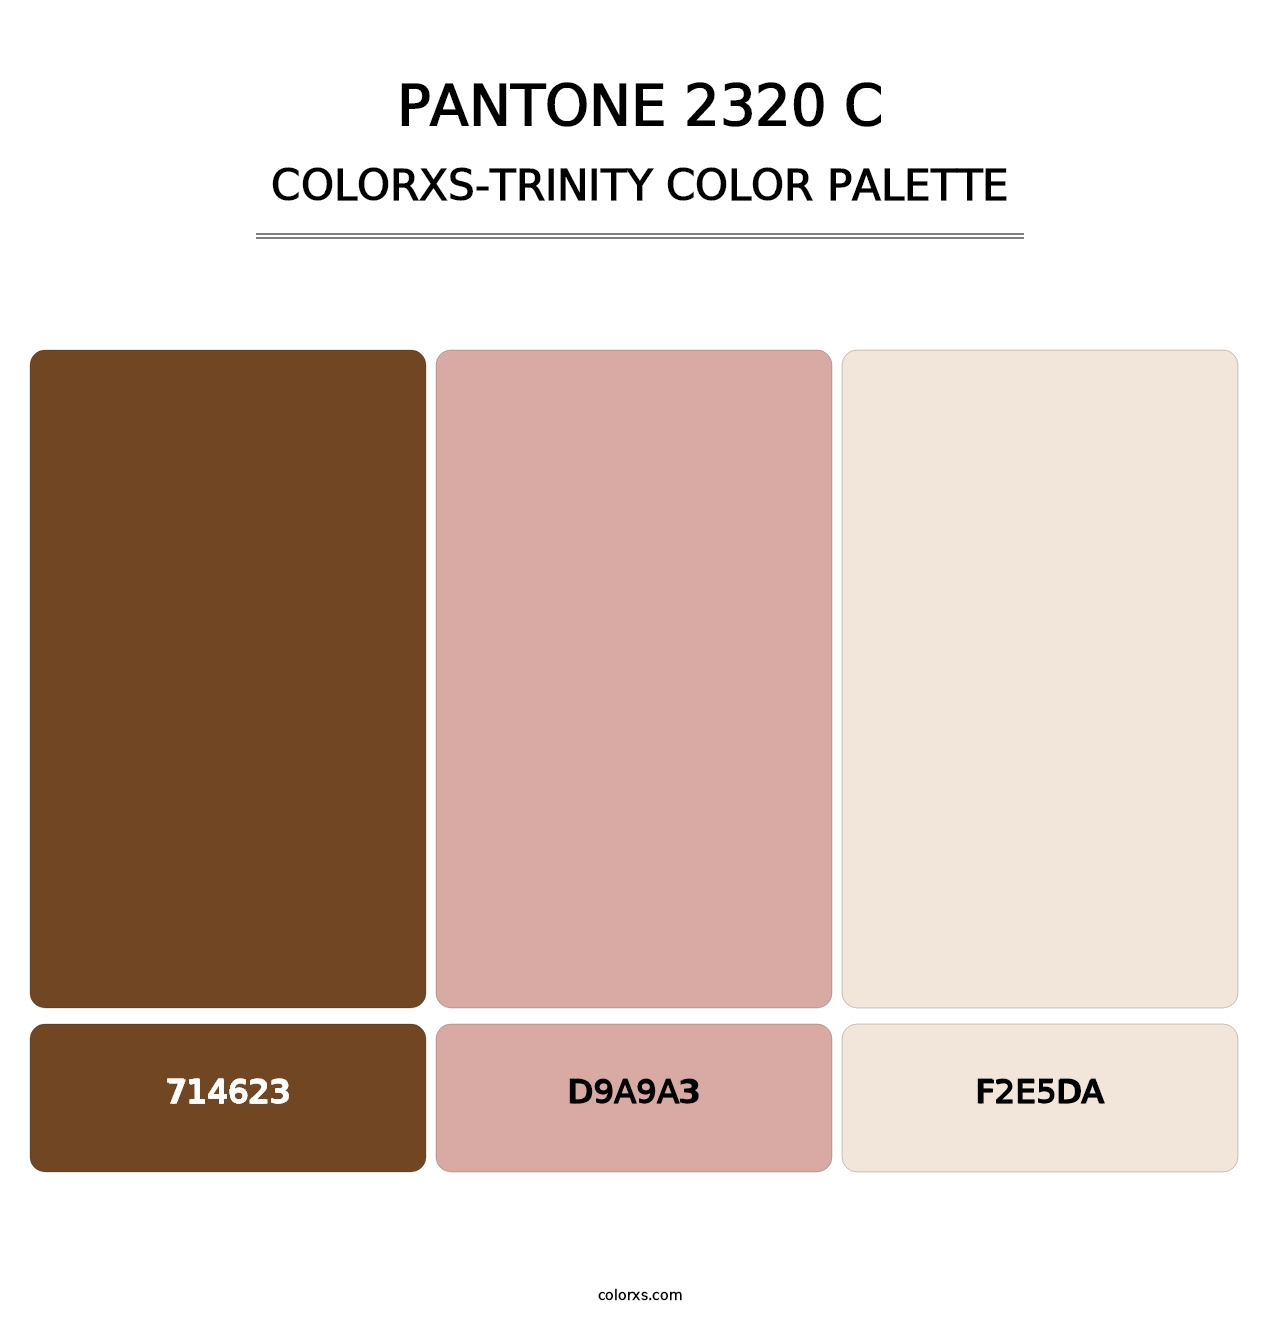 PANTONE 2320 C - Colorxs Trinity Palette